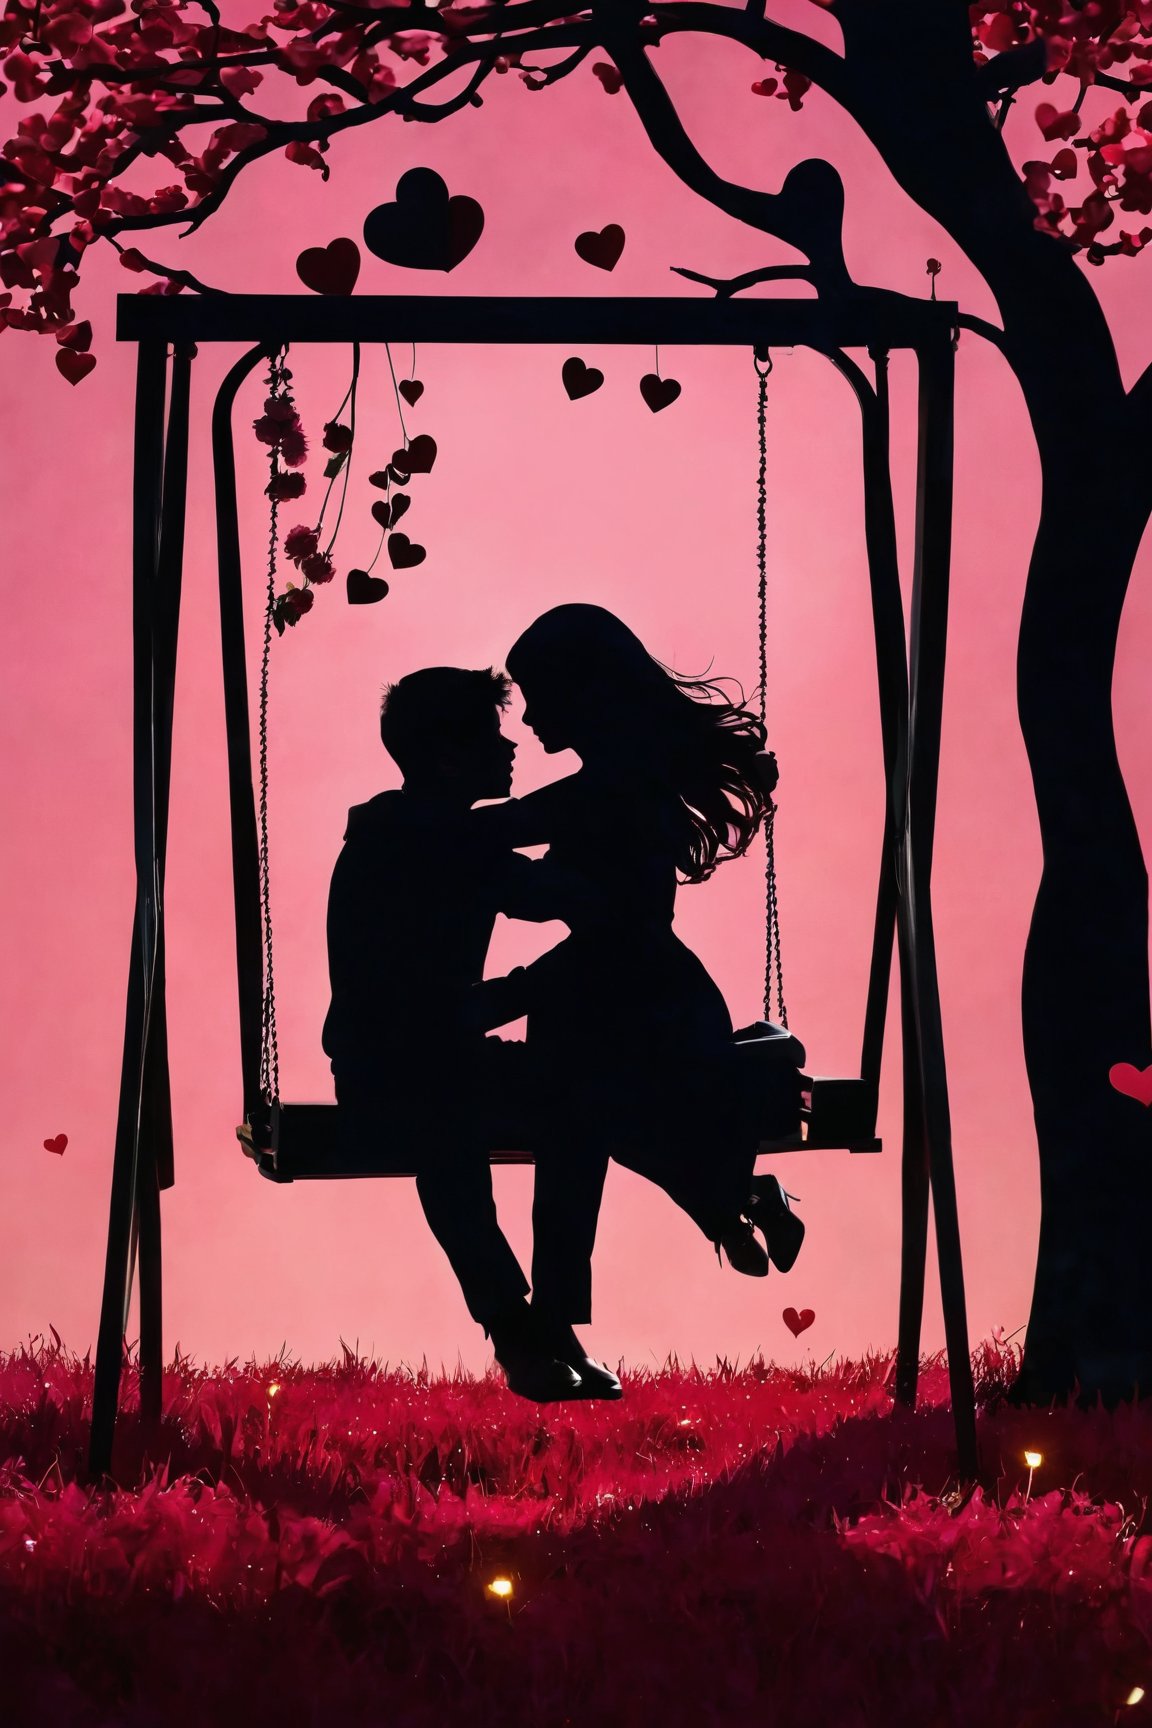 AiArtV, Valentines Day, 1girl, 1boy, sitting, flower, hetero, heart, tree, chair, grass, couple, silhouette, swing